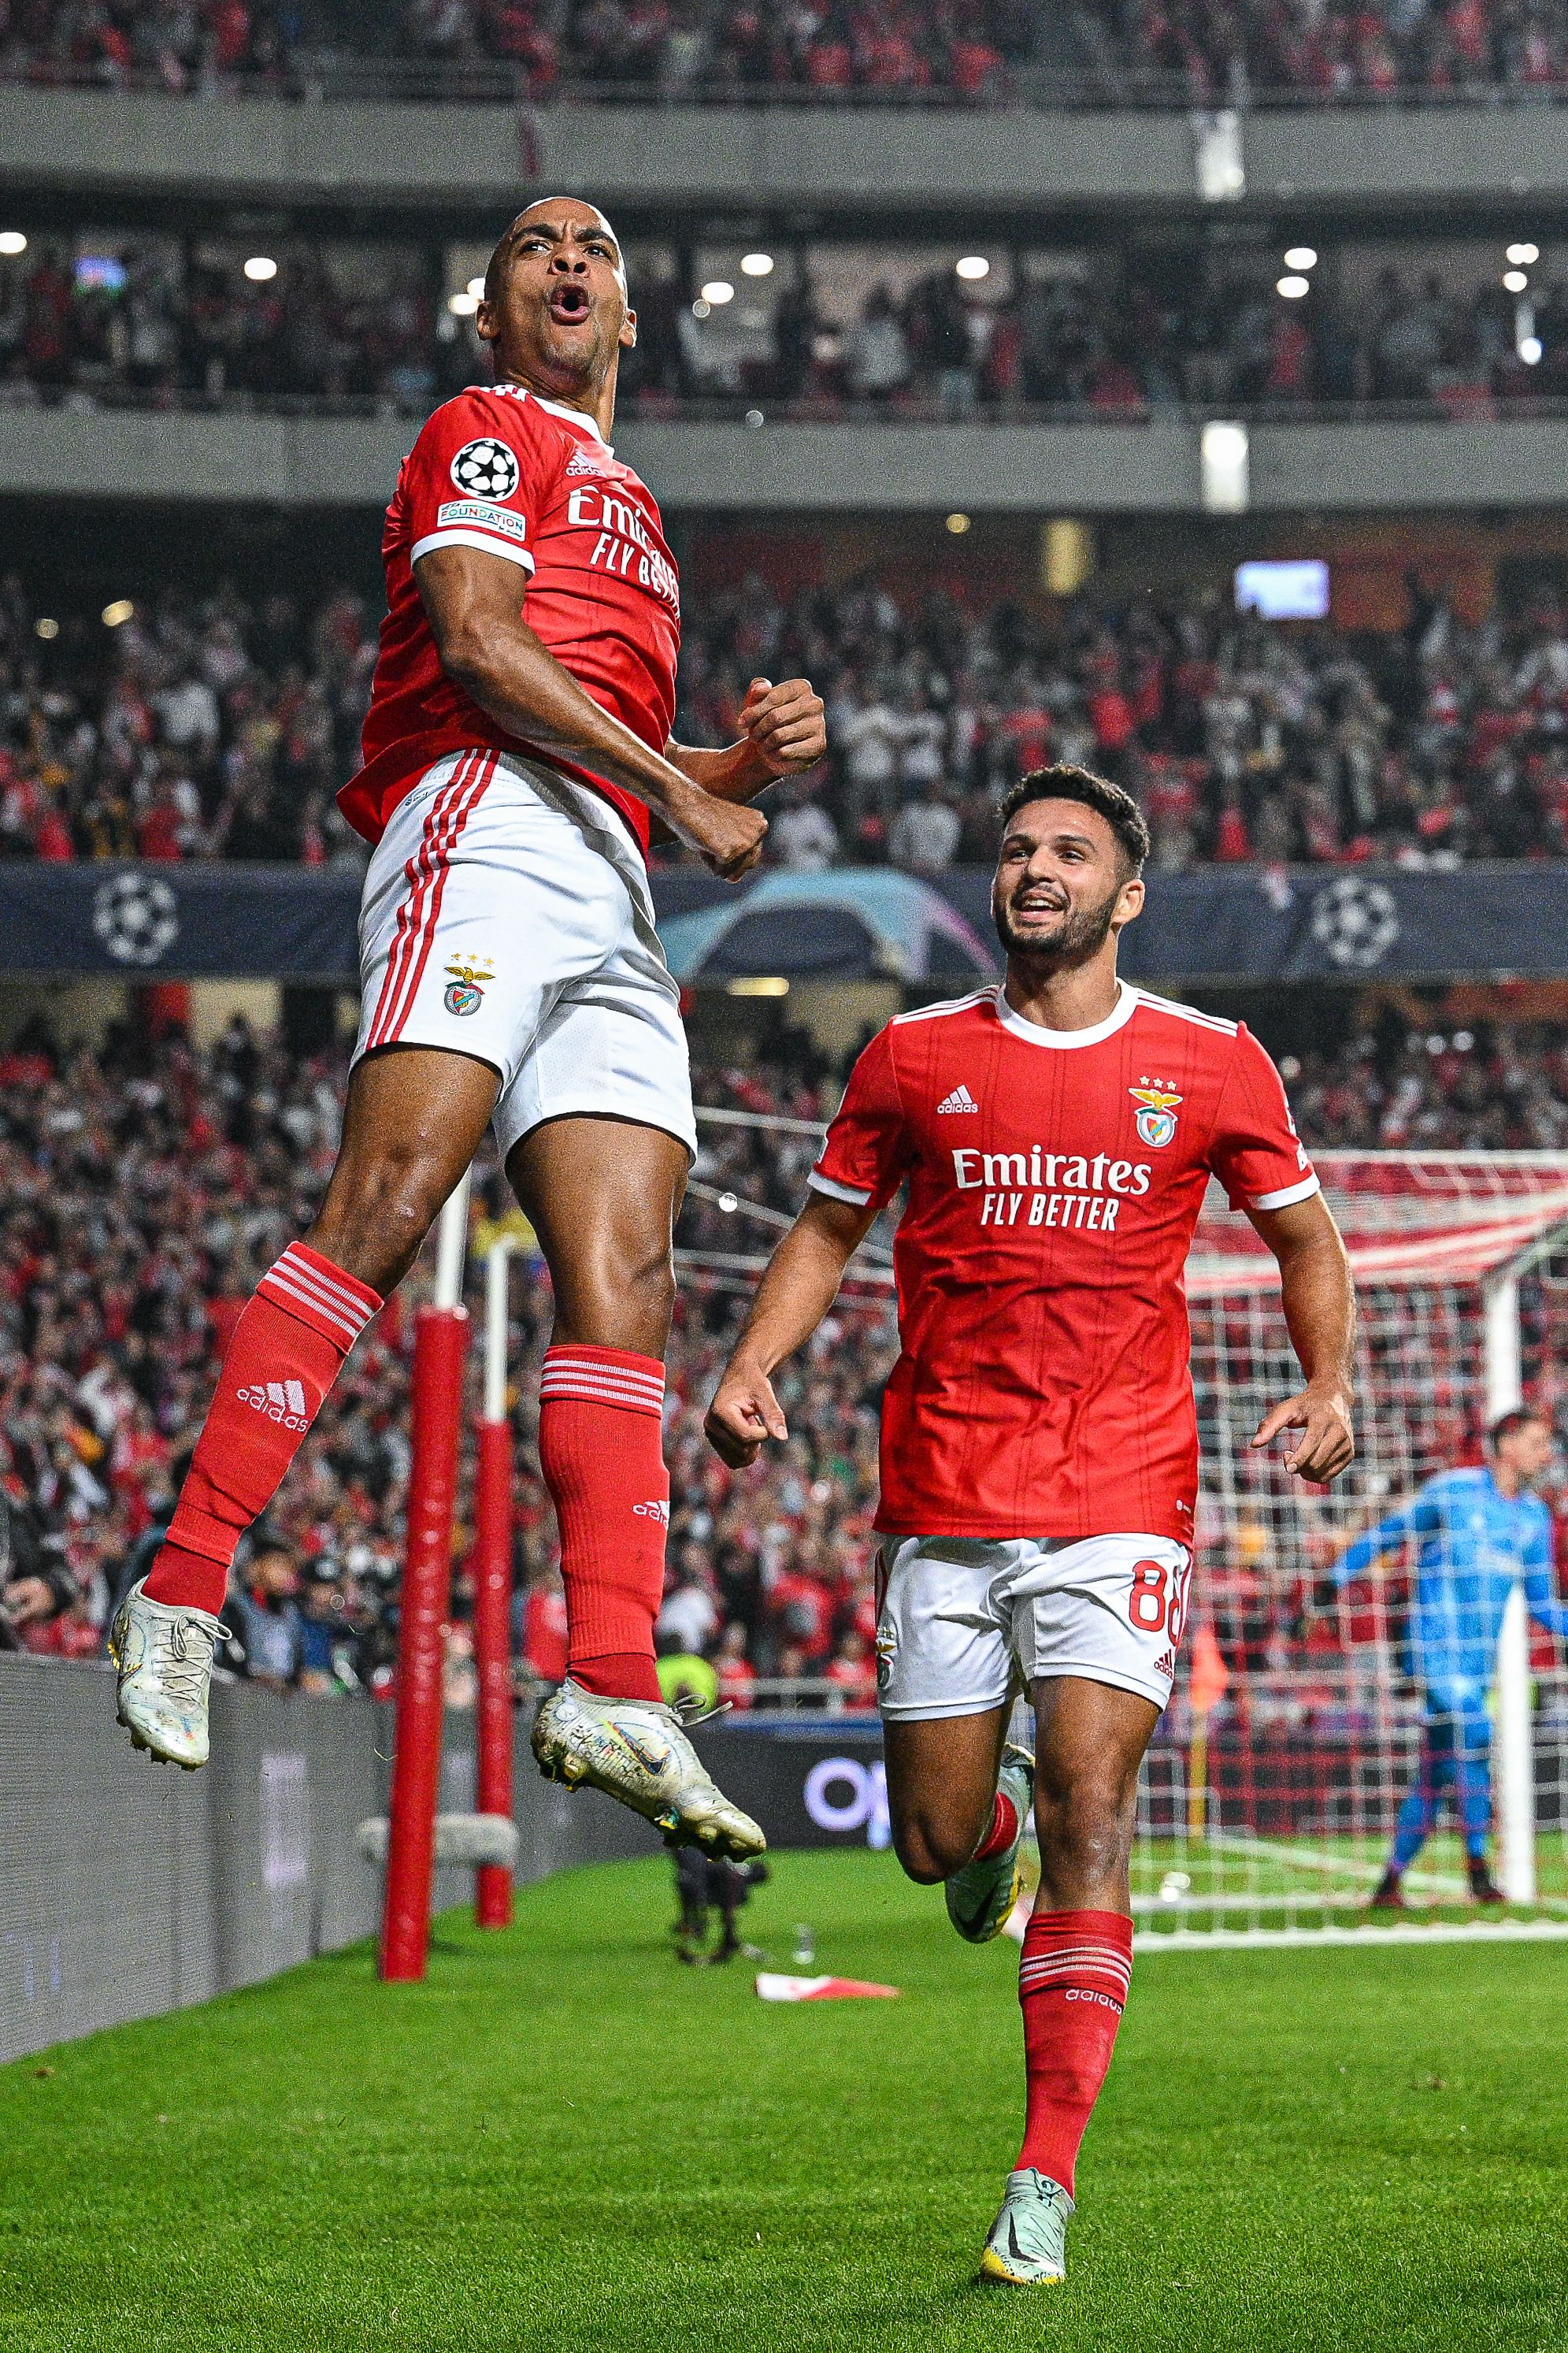 Benfica's Mario celebrates a Champions League goal.